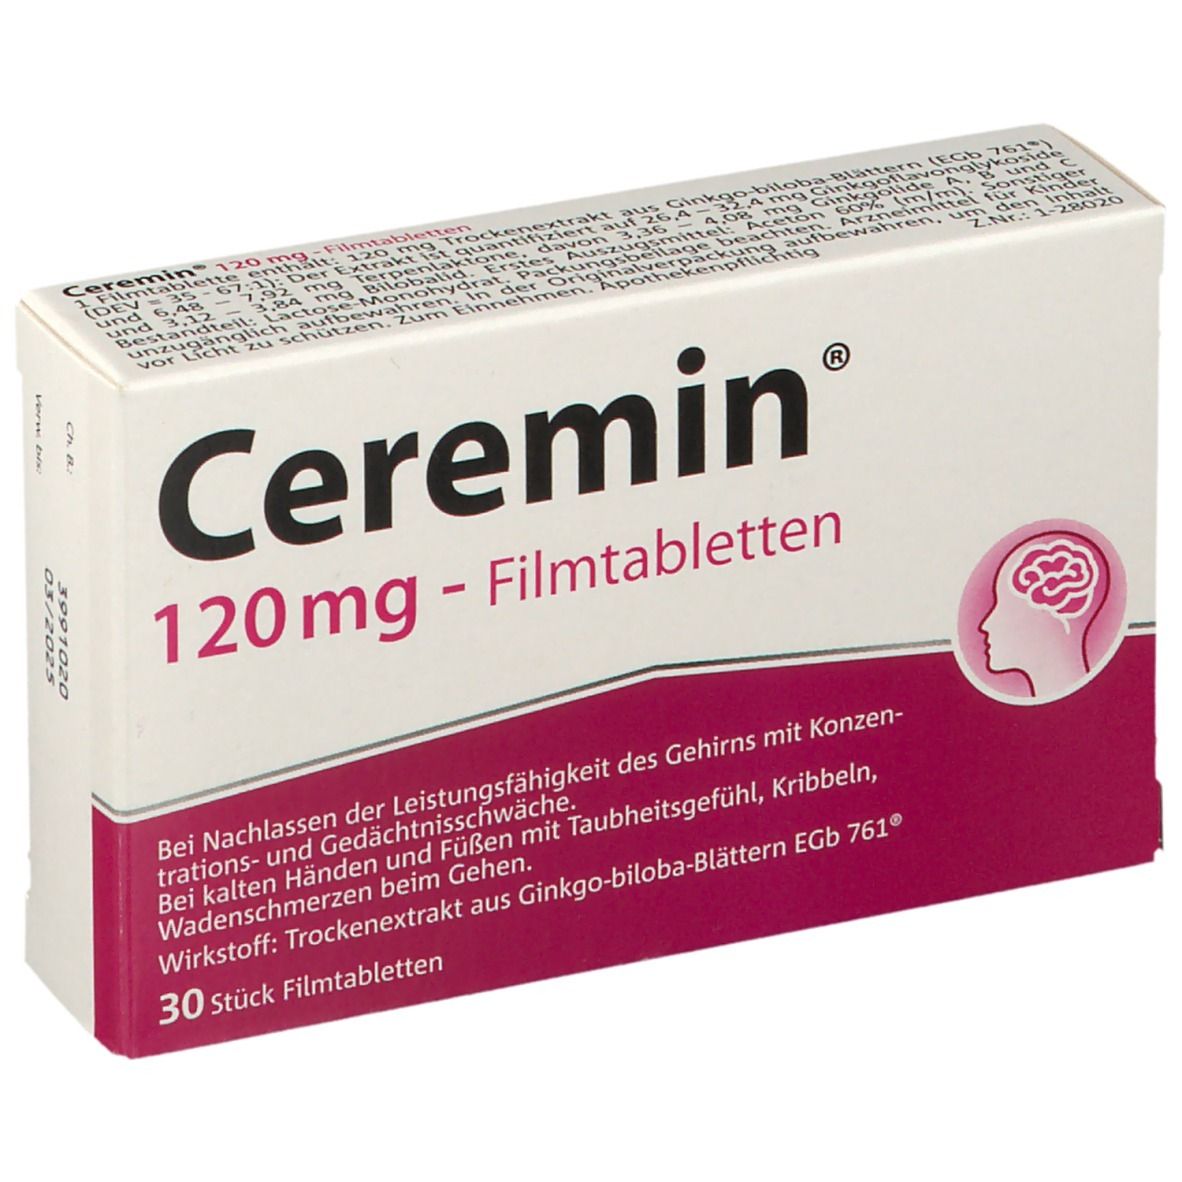 Ceremin® 120 mg